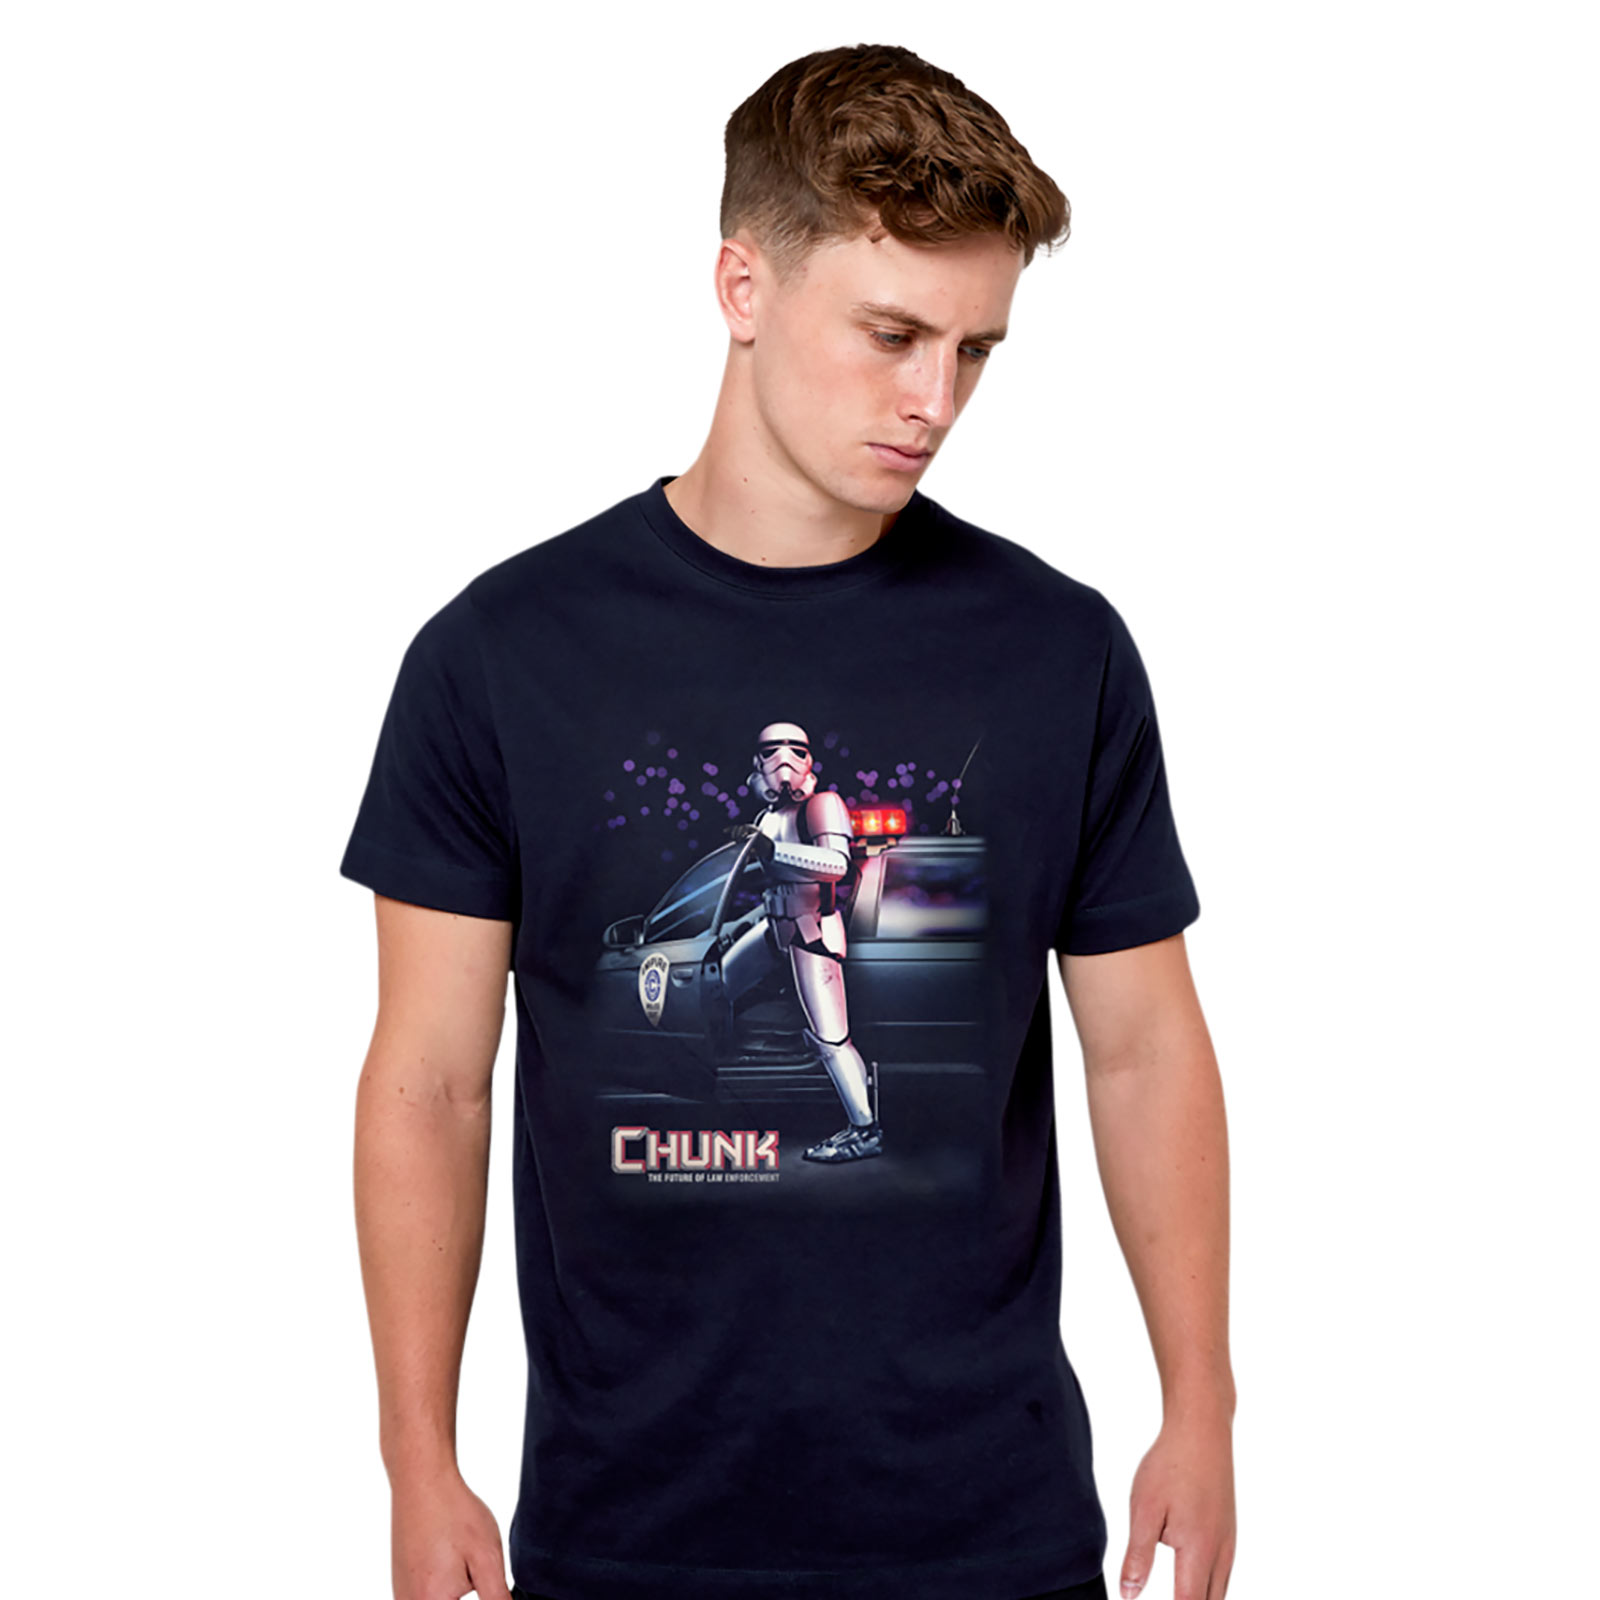 Robo Chunk T-Shirt für Star Wars Fans blau